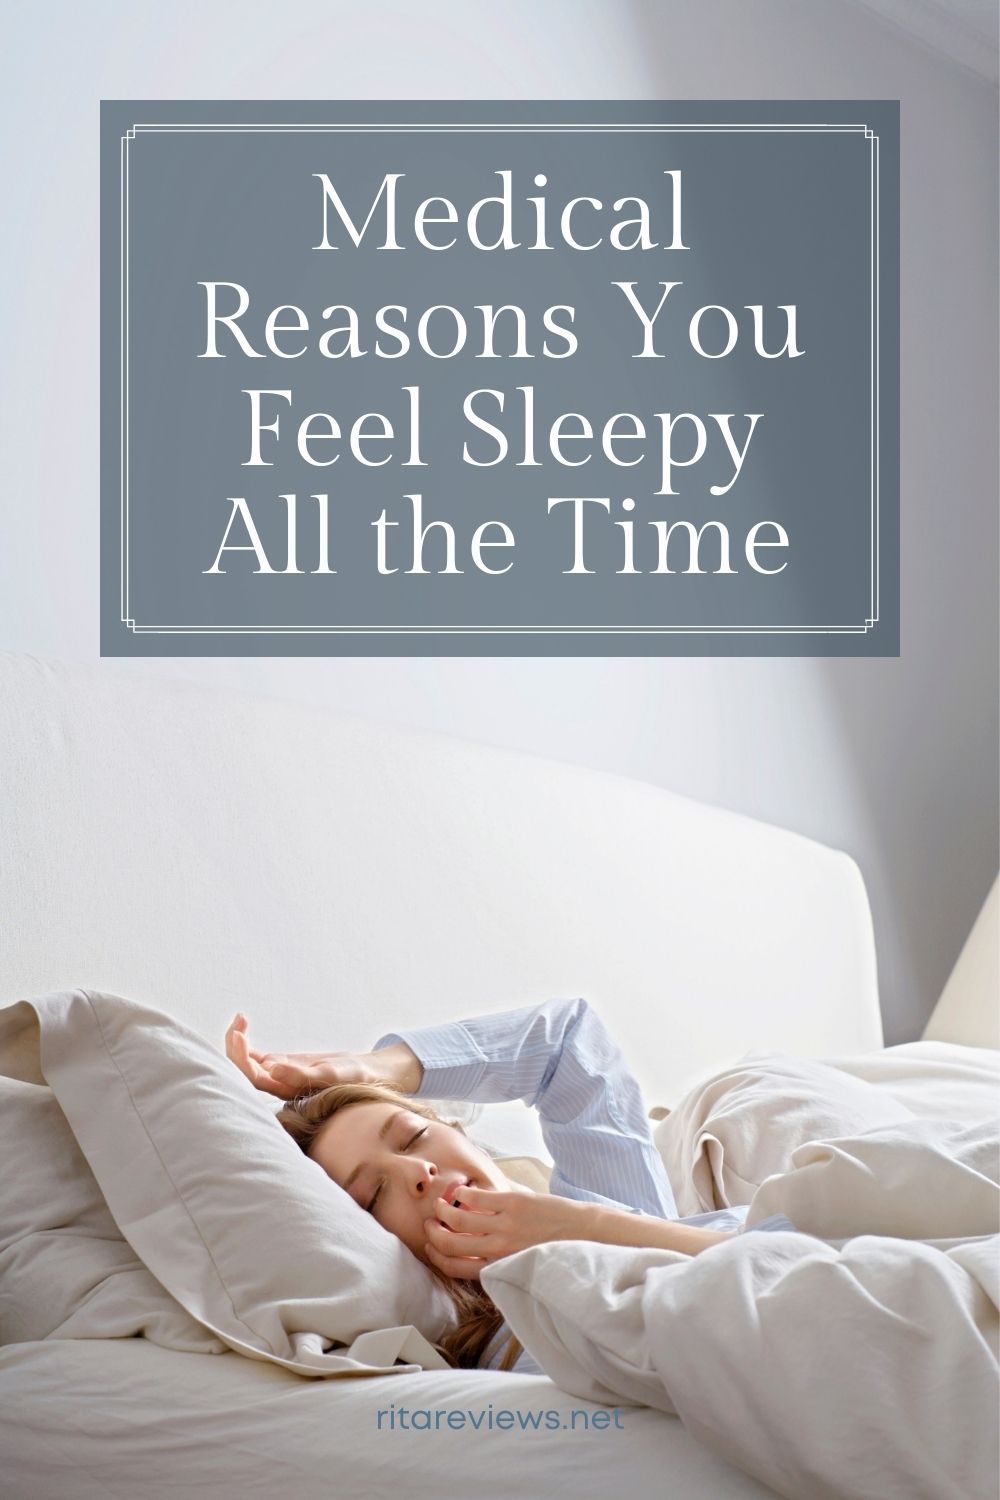 Medical Reasons You Feel Sleepy All the Time